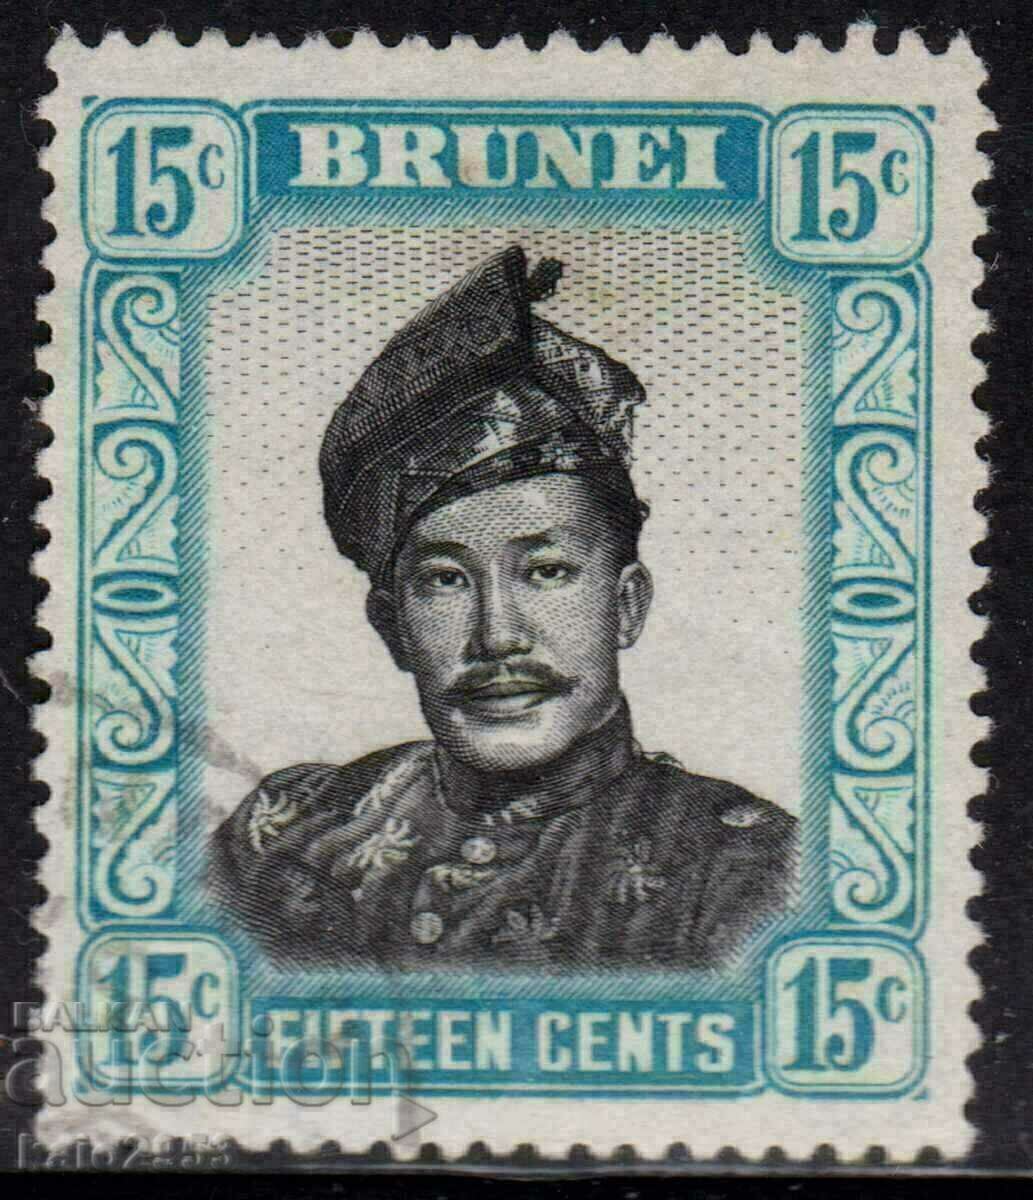 GB/Brunei-Protectorate-1952-Sultan Omar, stamp